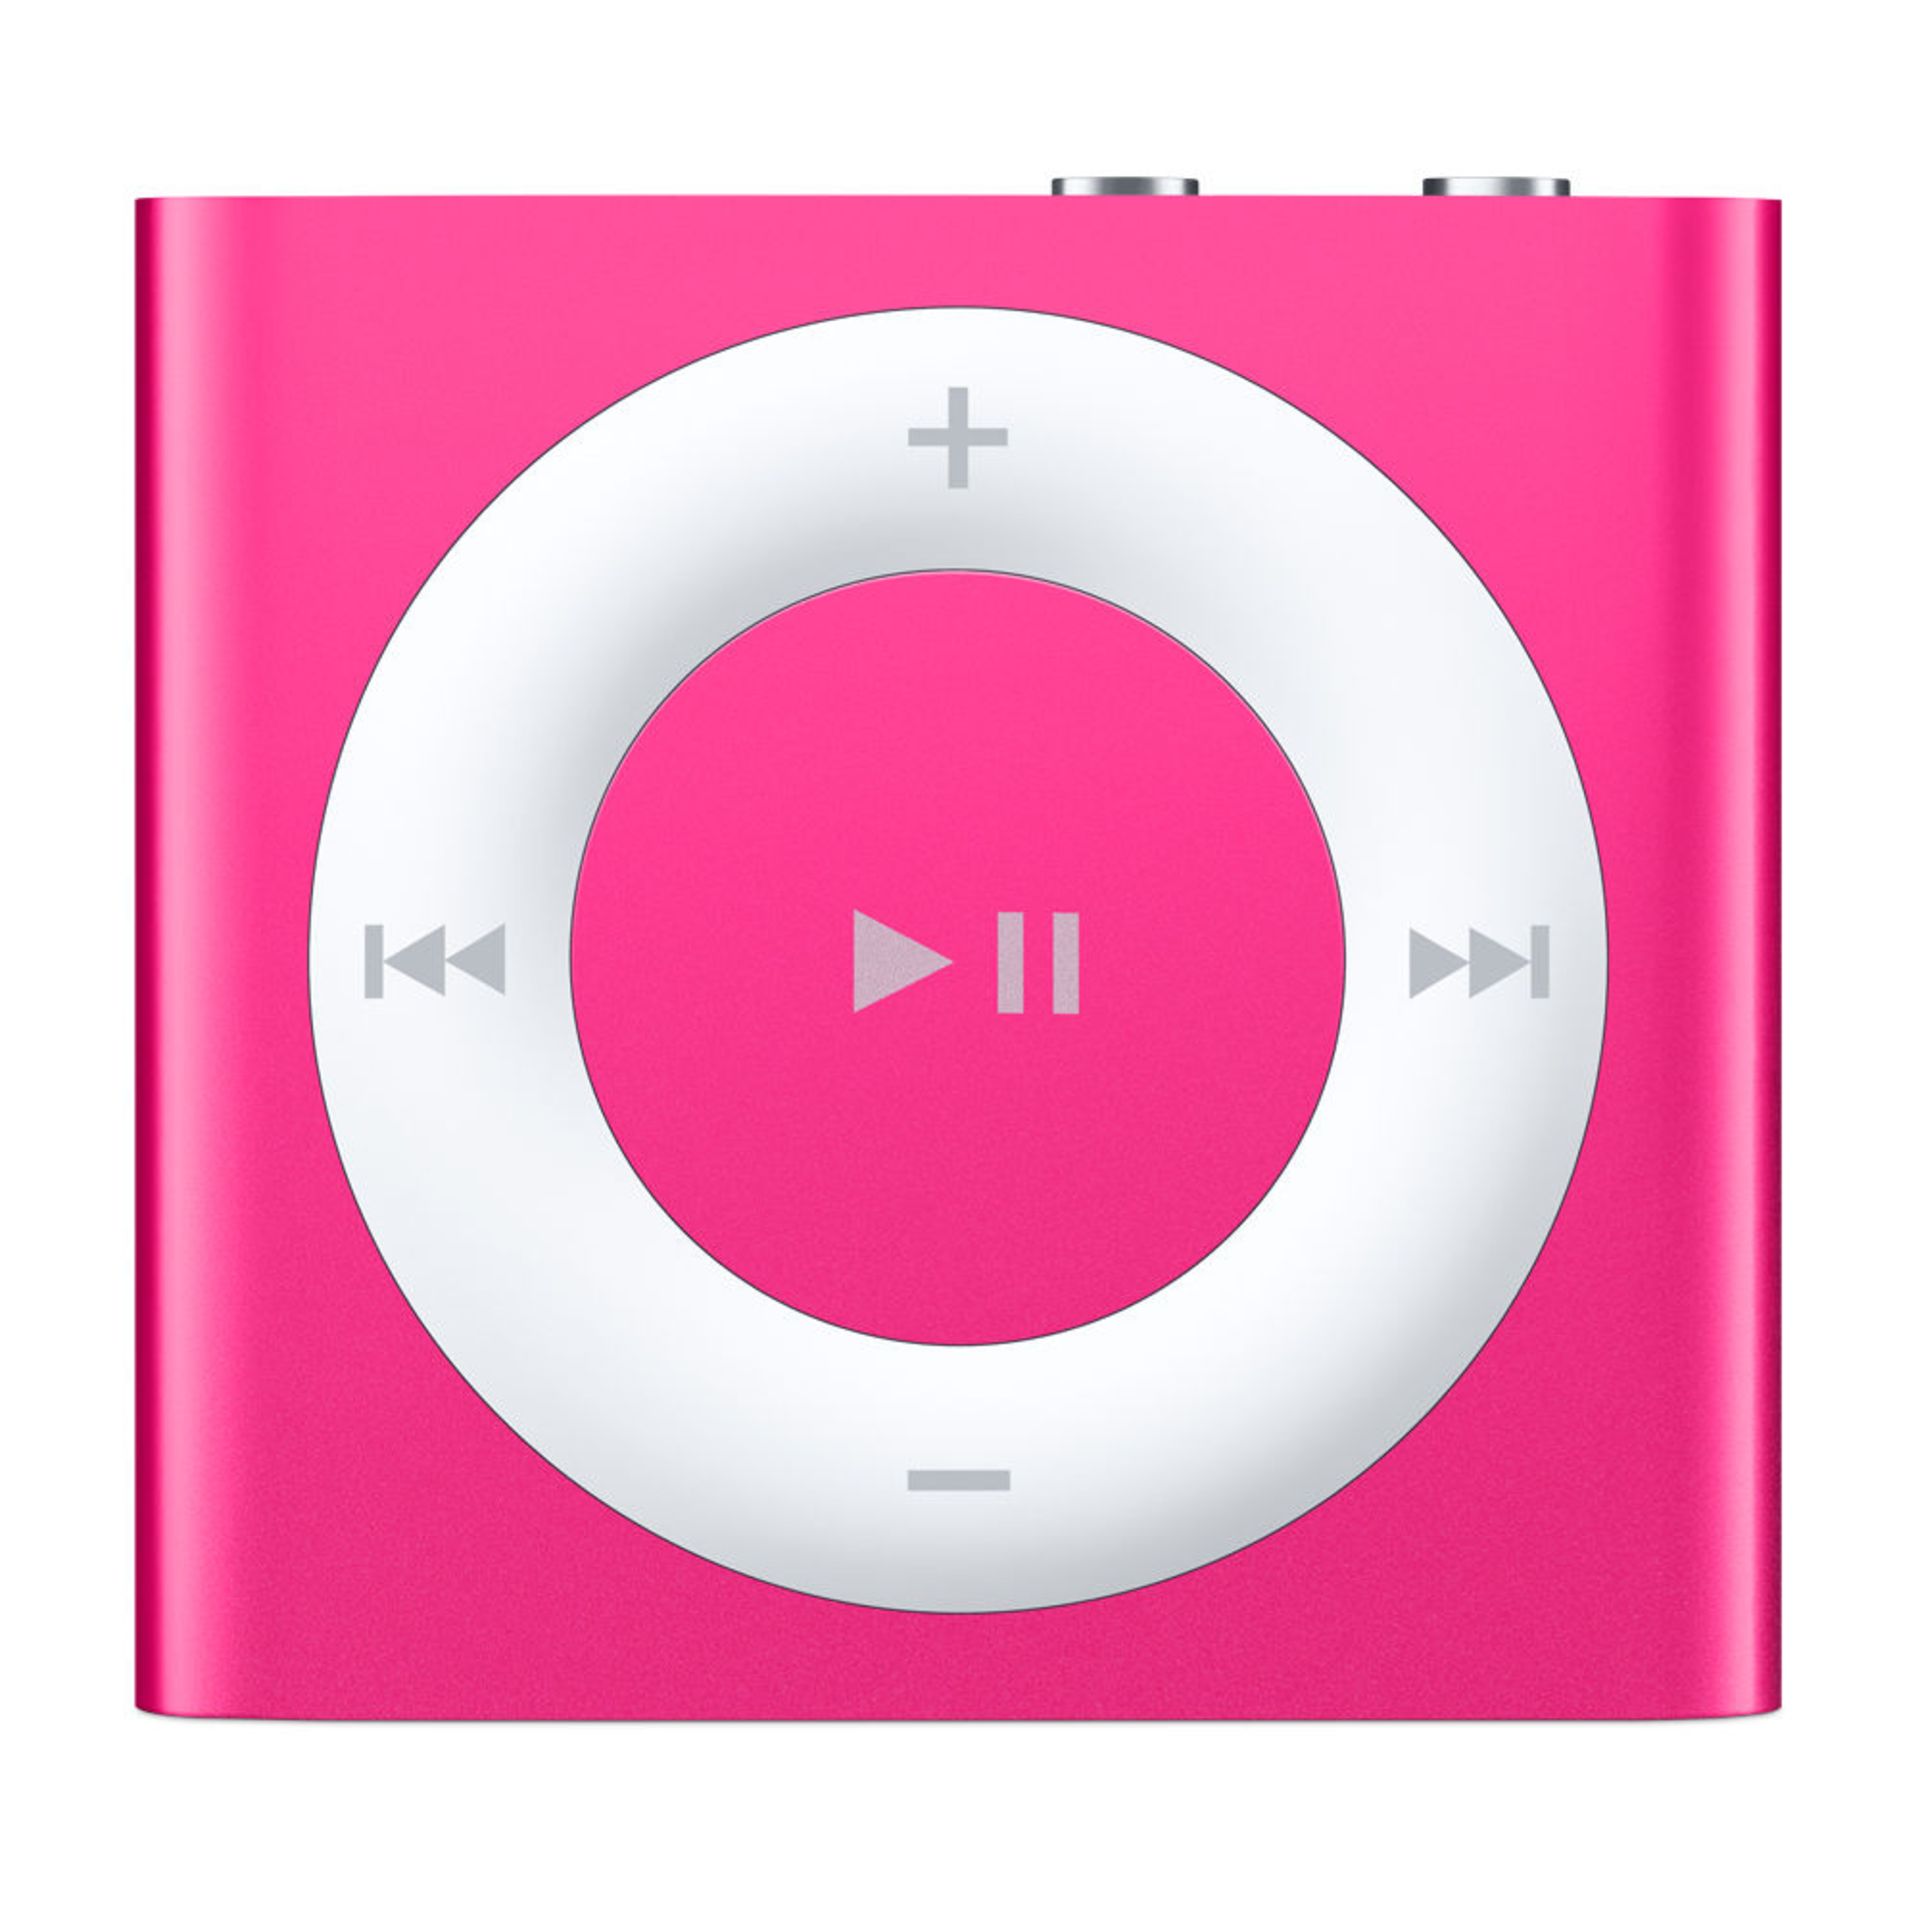 V Grade A Apple iPod shuffle - 4th generation - 2GB - pink